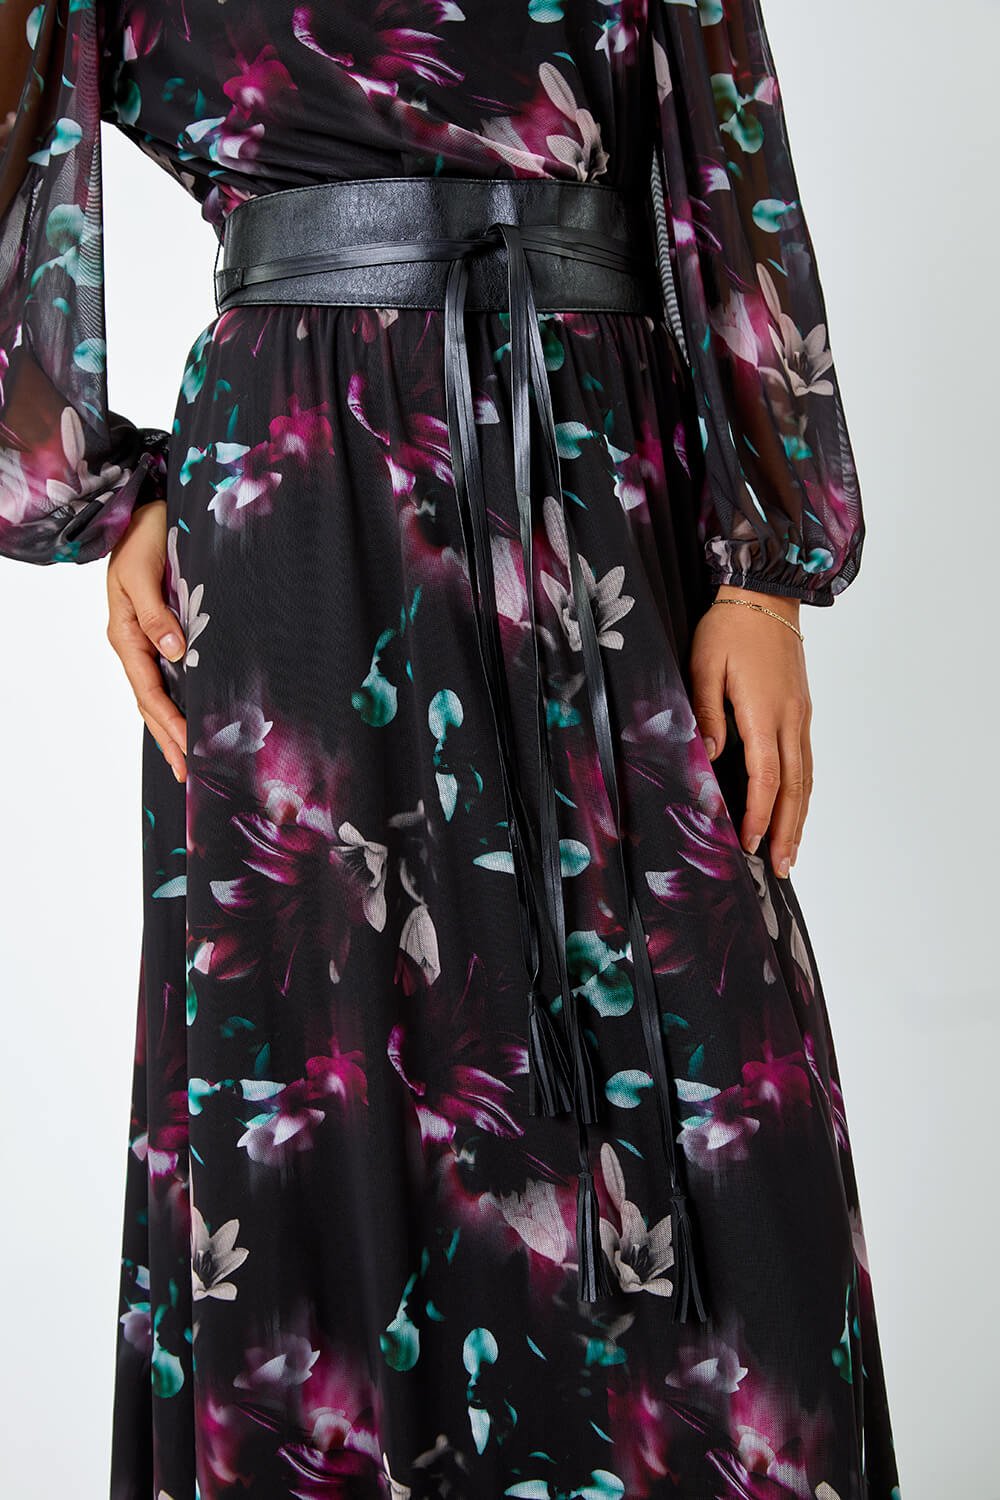 Black Floral Print Belted Midi Stretch Dress, Image 5 of 5